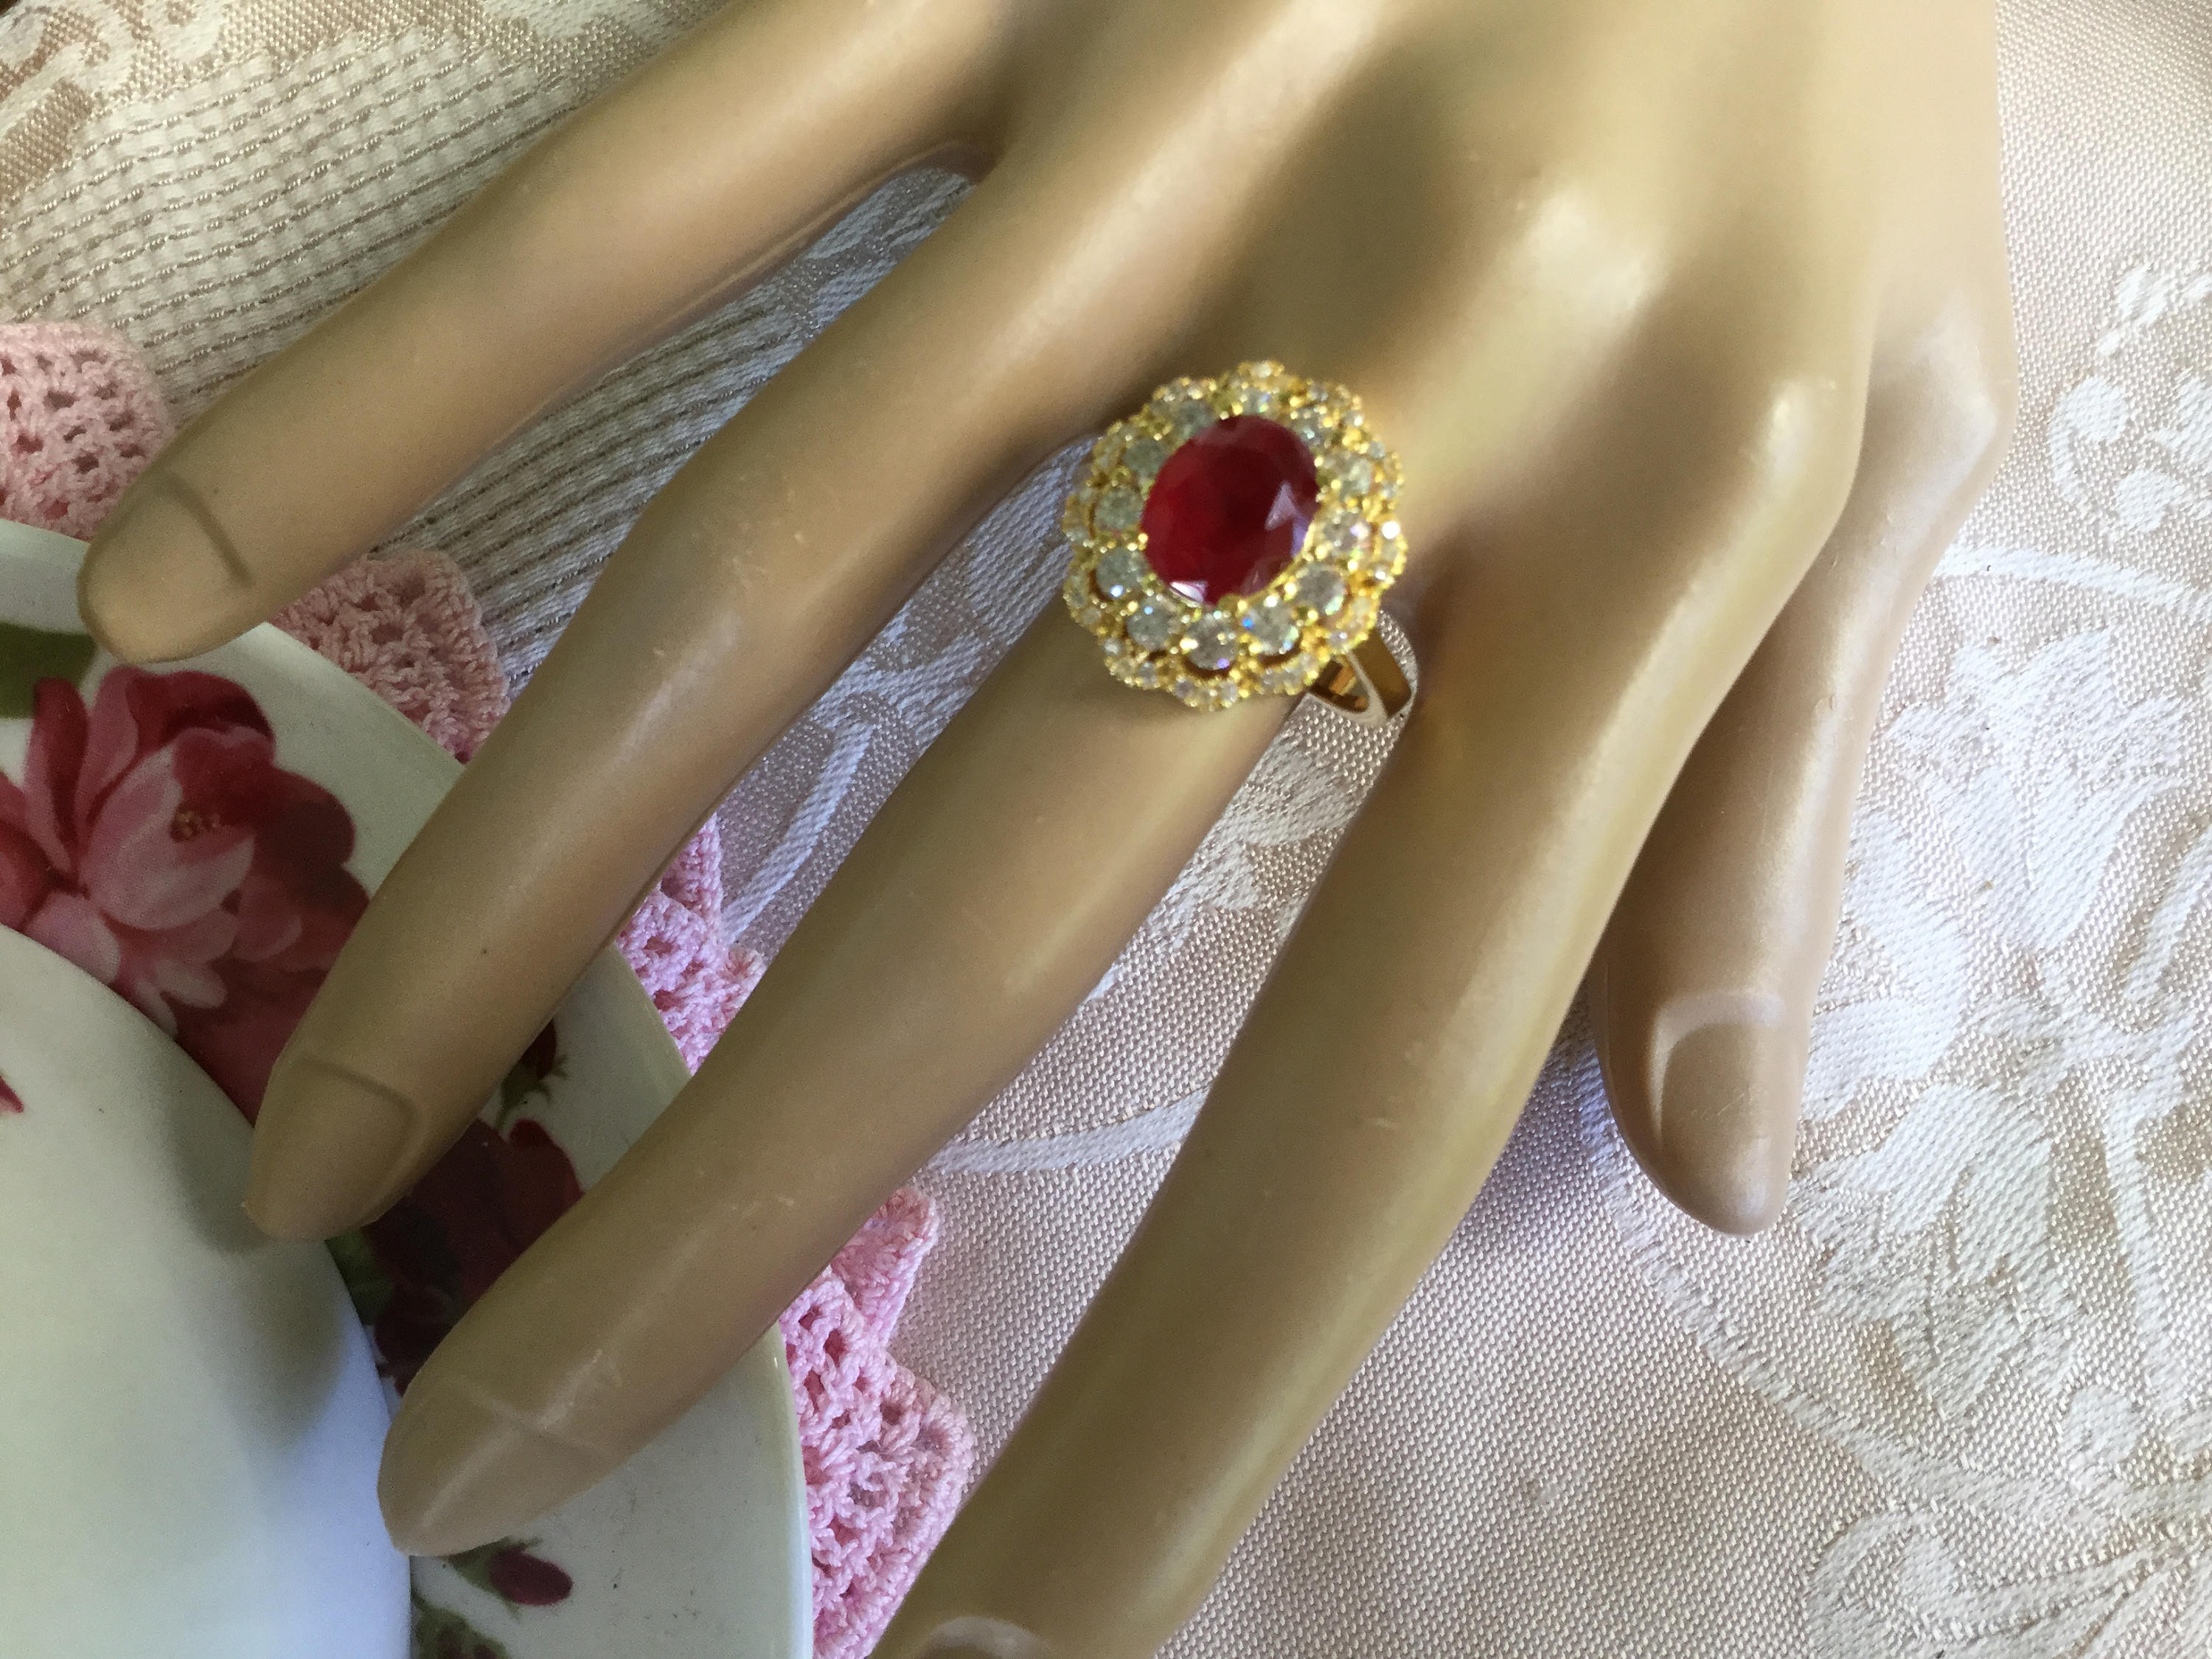 Buy Trendy Fine Gold & Diamond Jewellery for Women Online | Mia by Tanishq